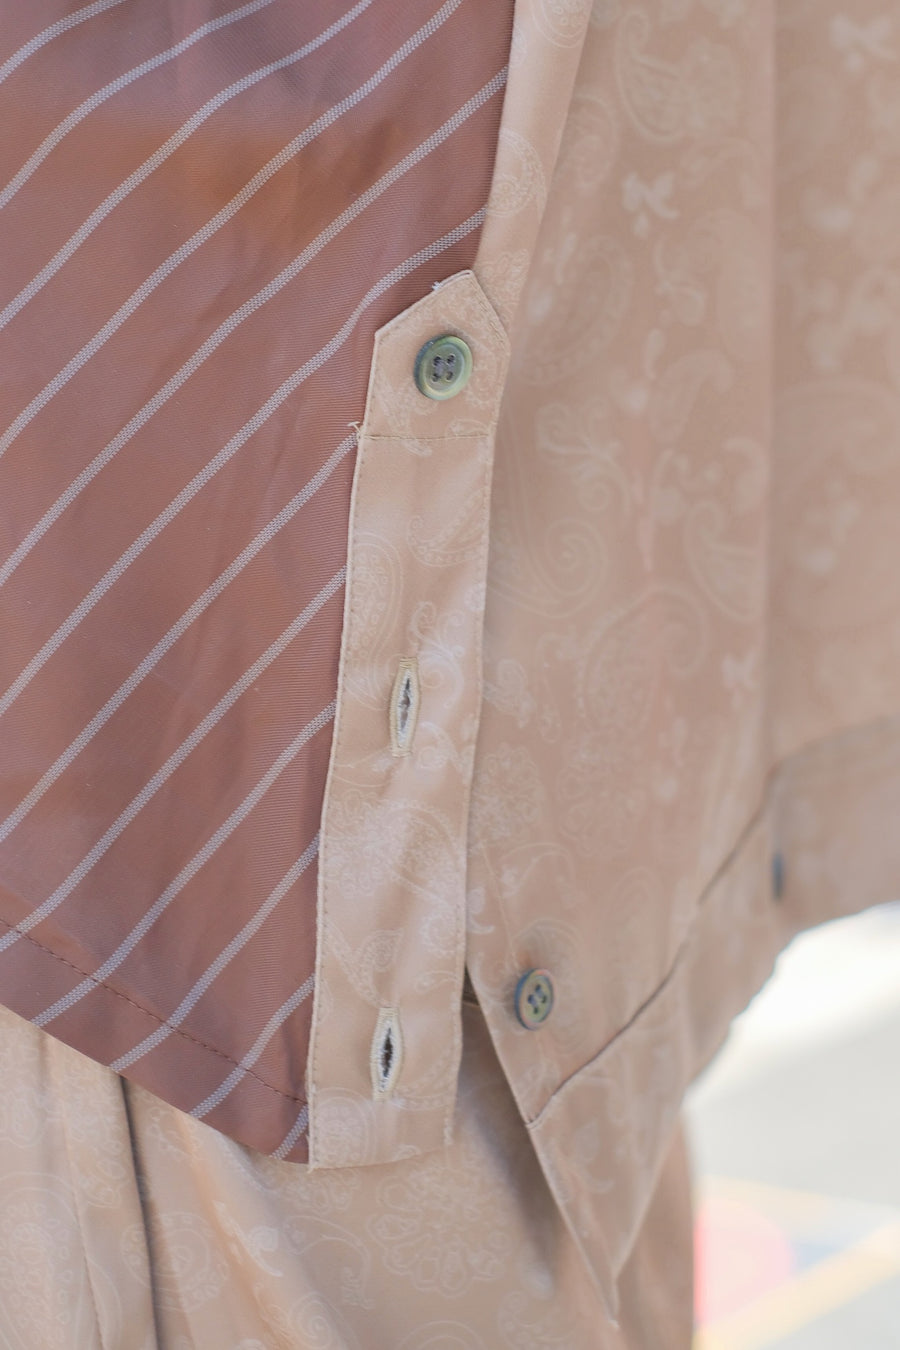 elephant TRIBAL fabrics  Out of alignment Resort shirt(BEIGE)